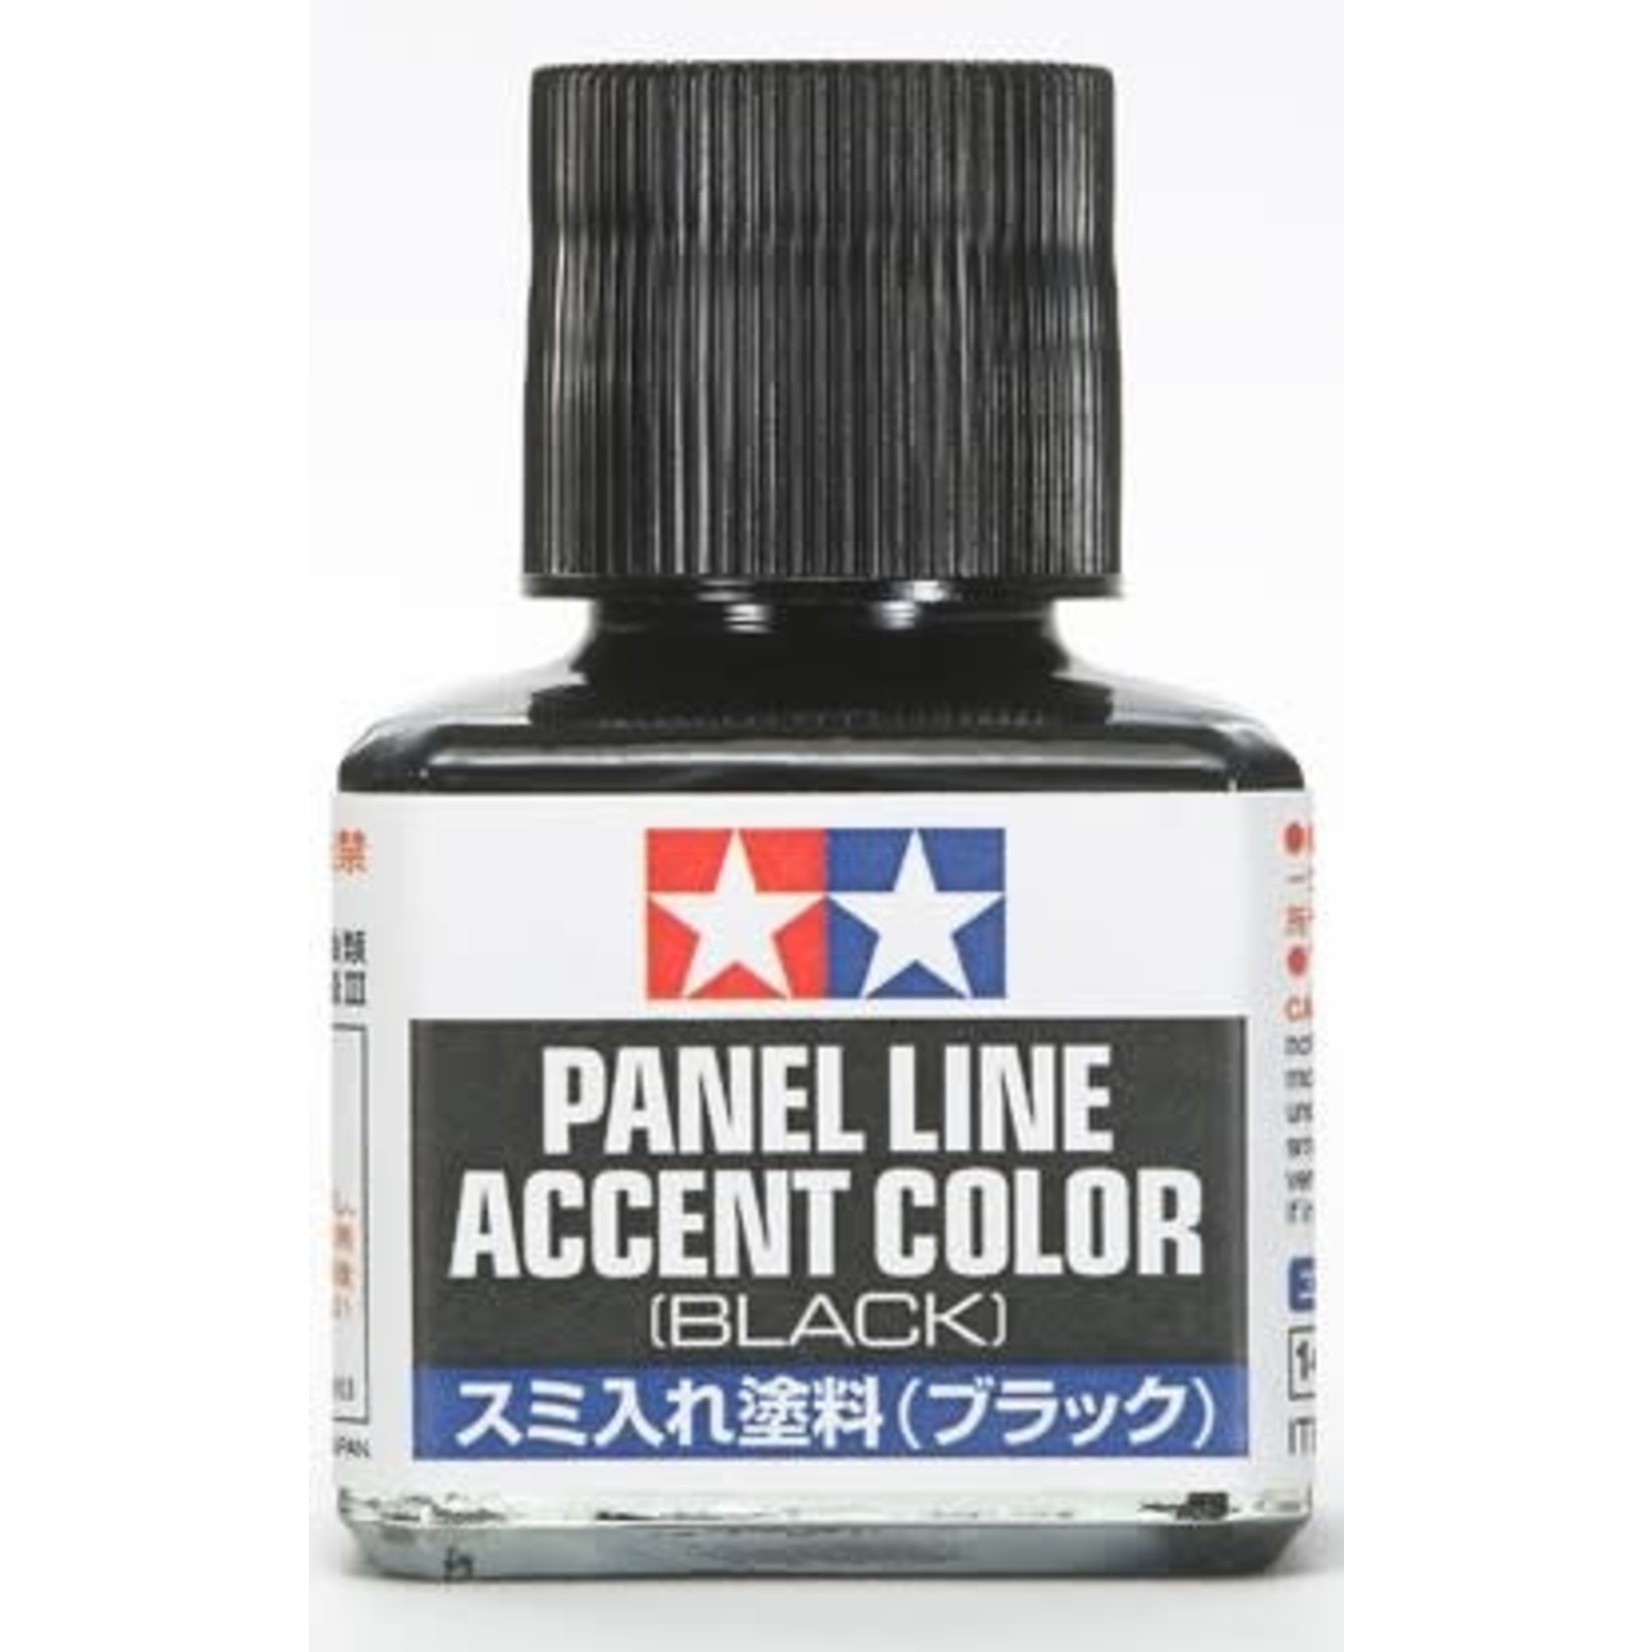 Tamiya Tamiya Panel Line Accent Color (Black) 40ml